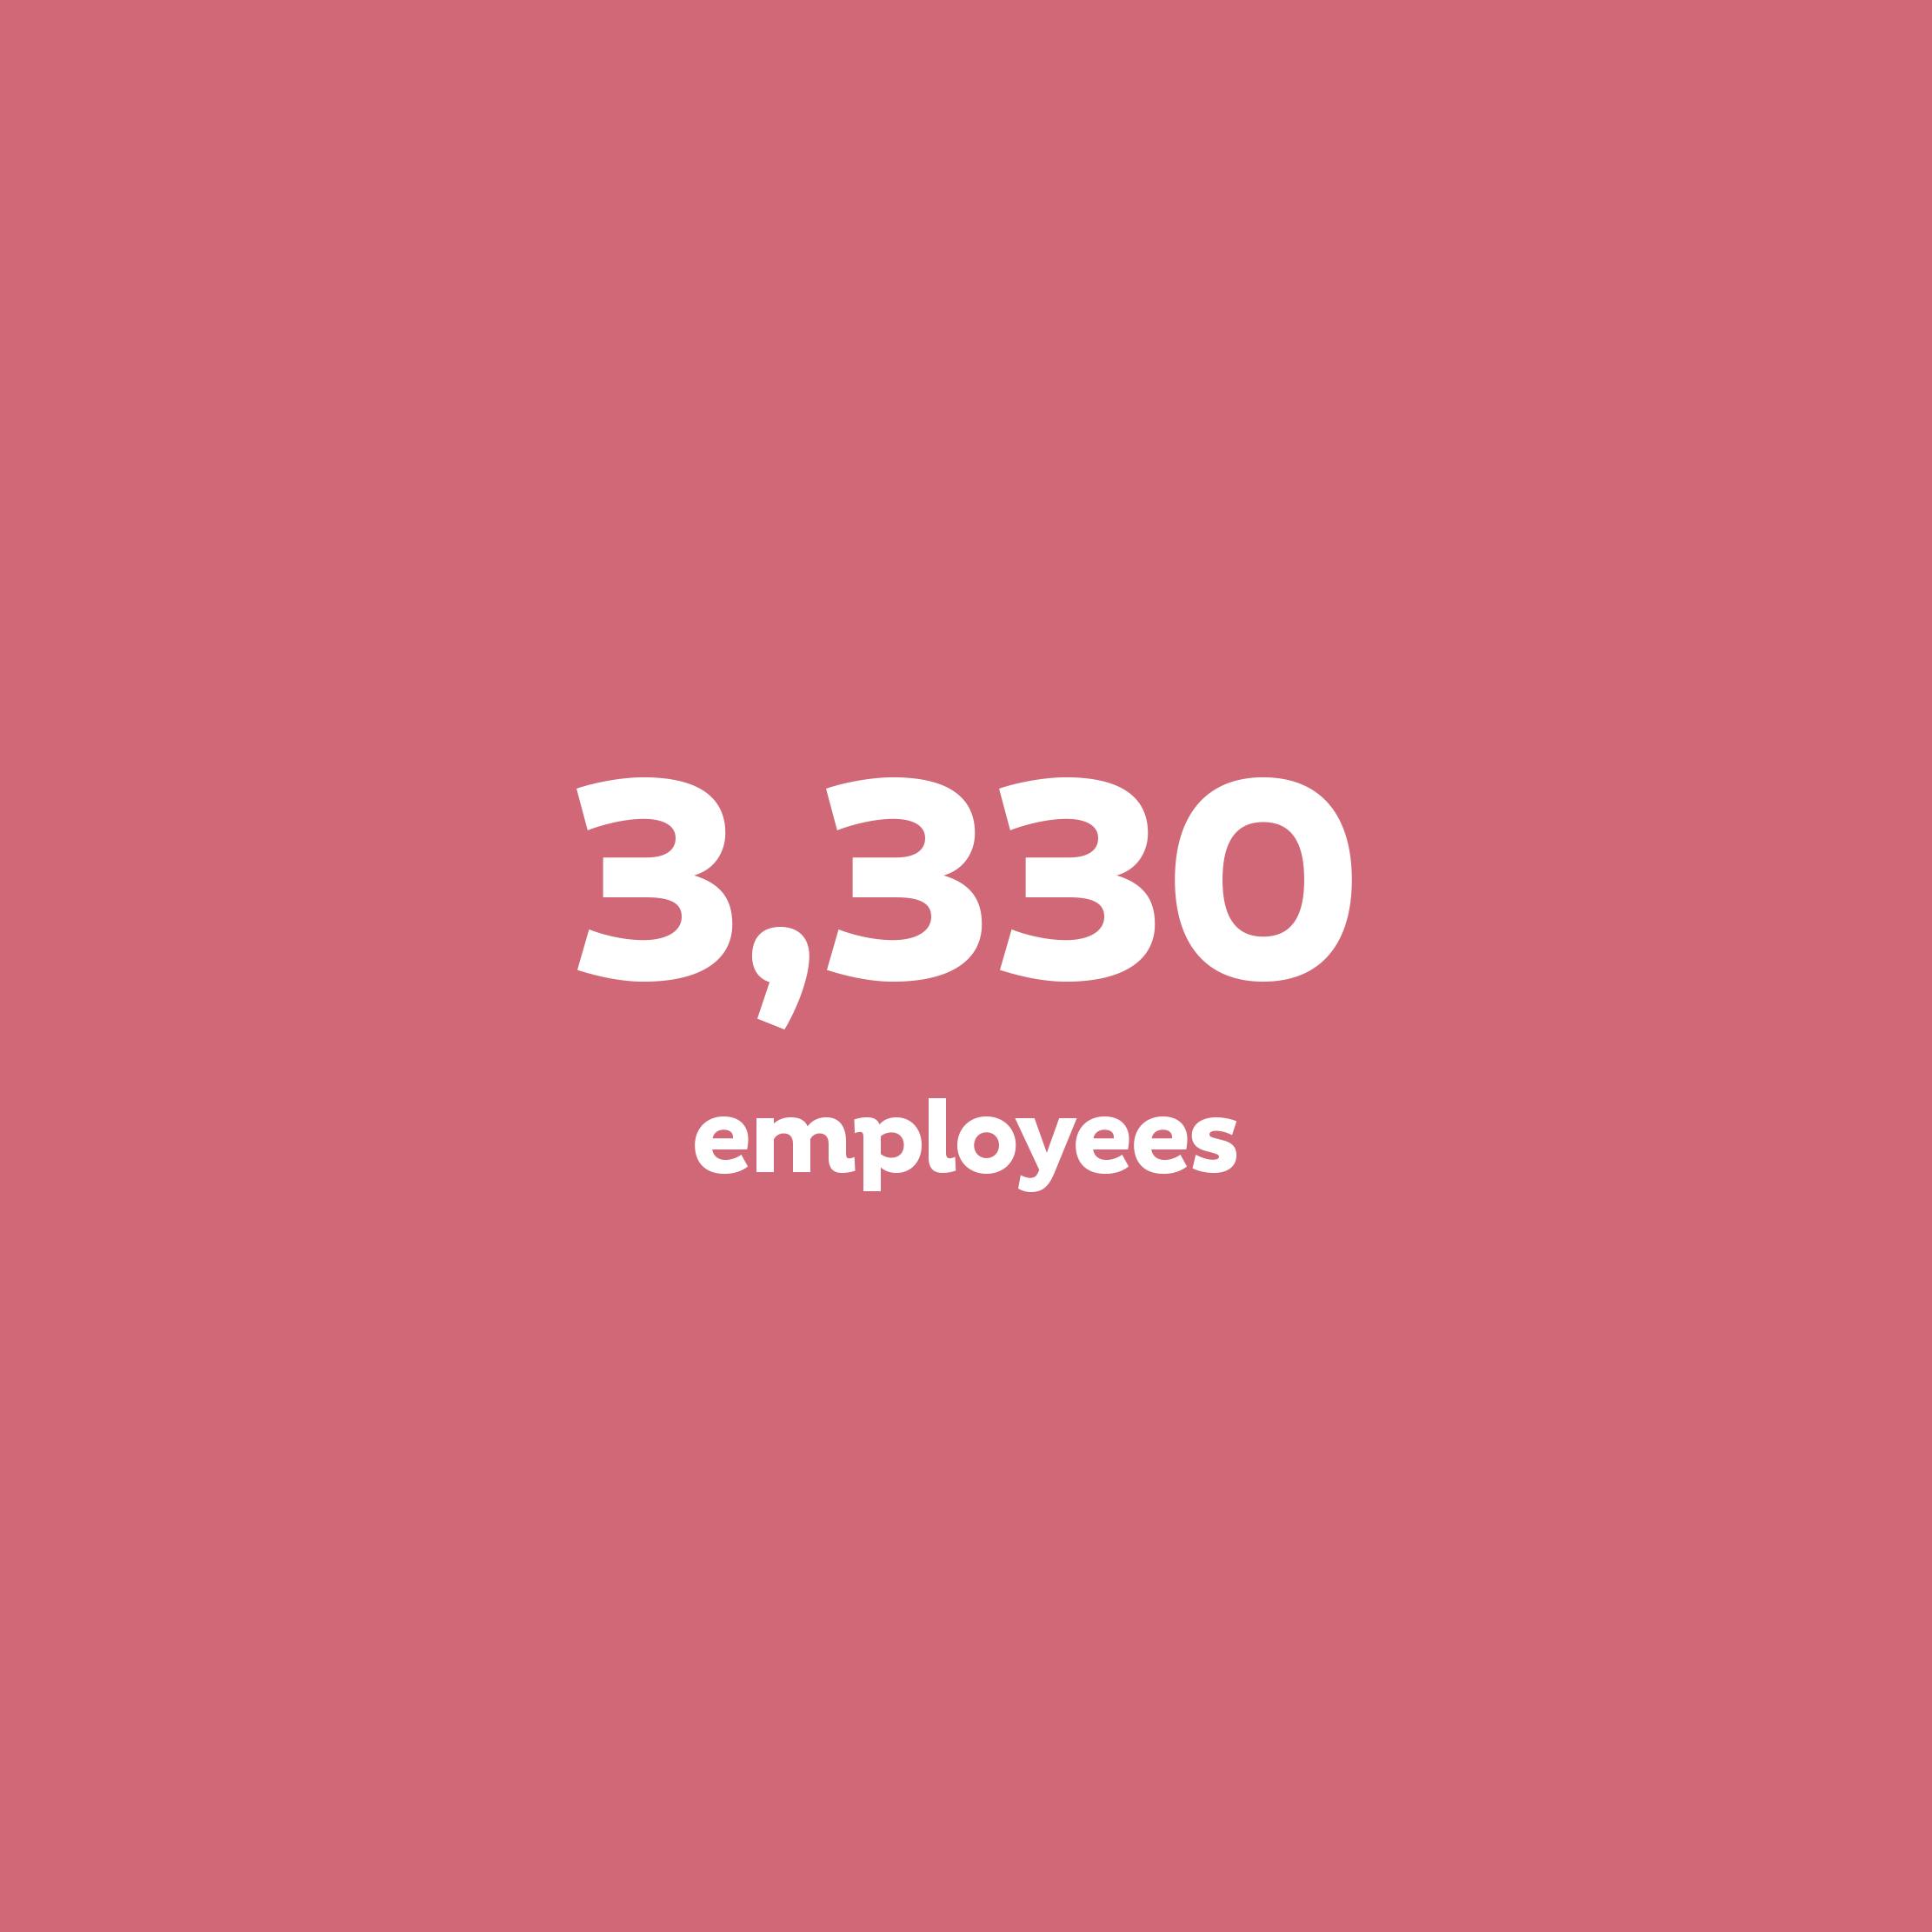 3,330 employees